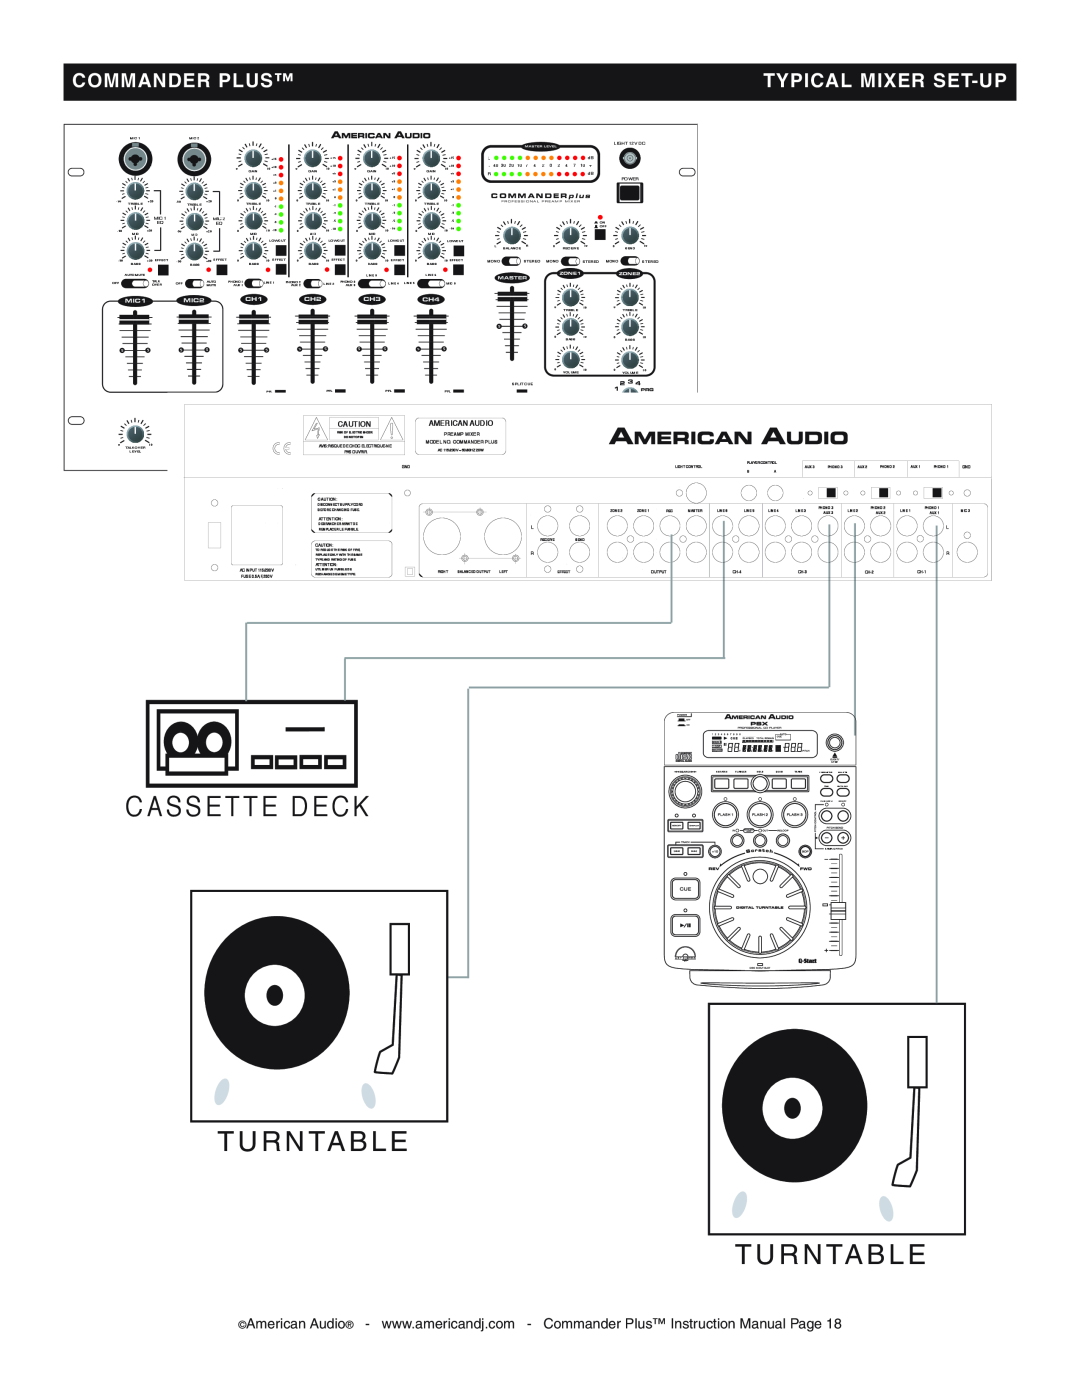 American Audio CommanderPlus Cassette Deck, Turntable Turntable, Commander Plus, Typical Mixer Set-Up, Cauti On, Master 